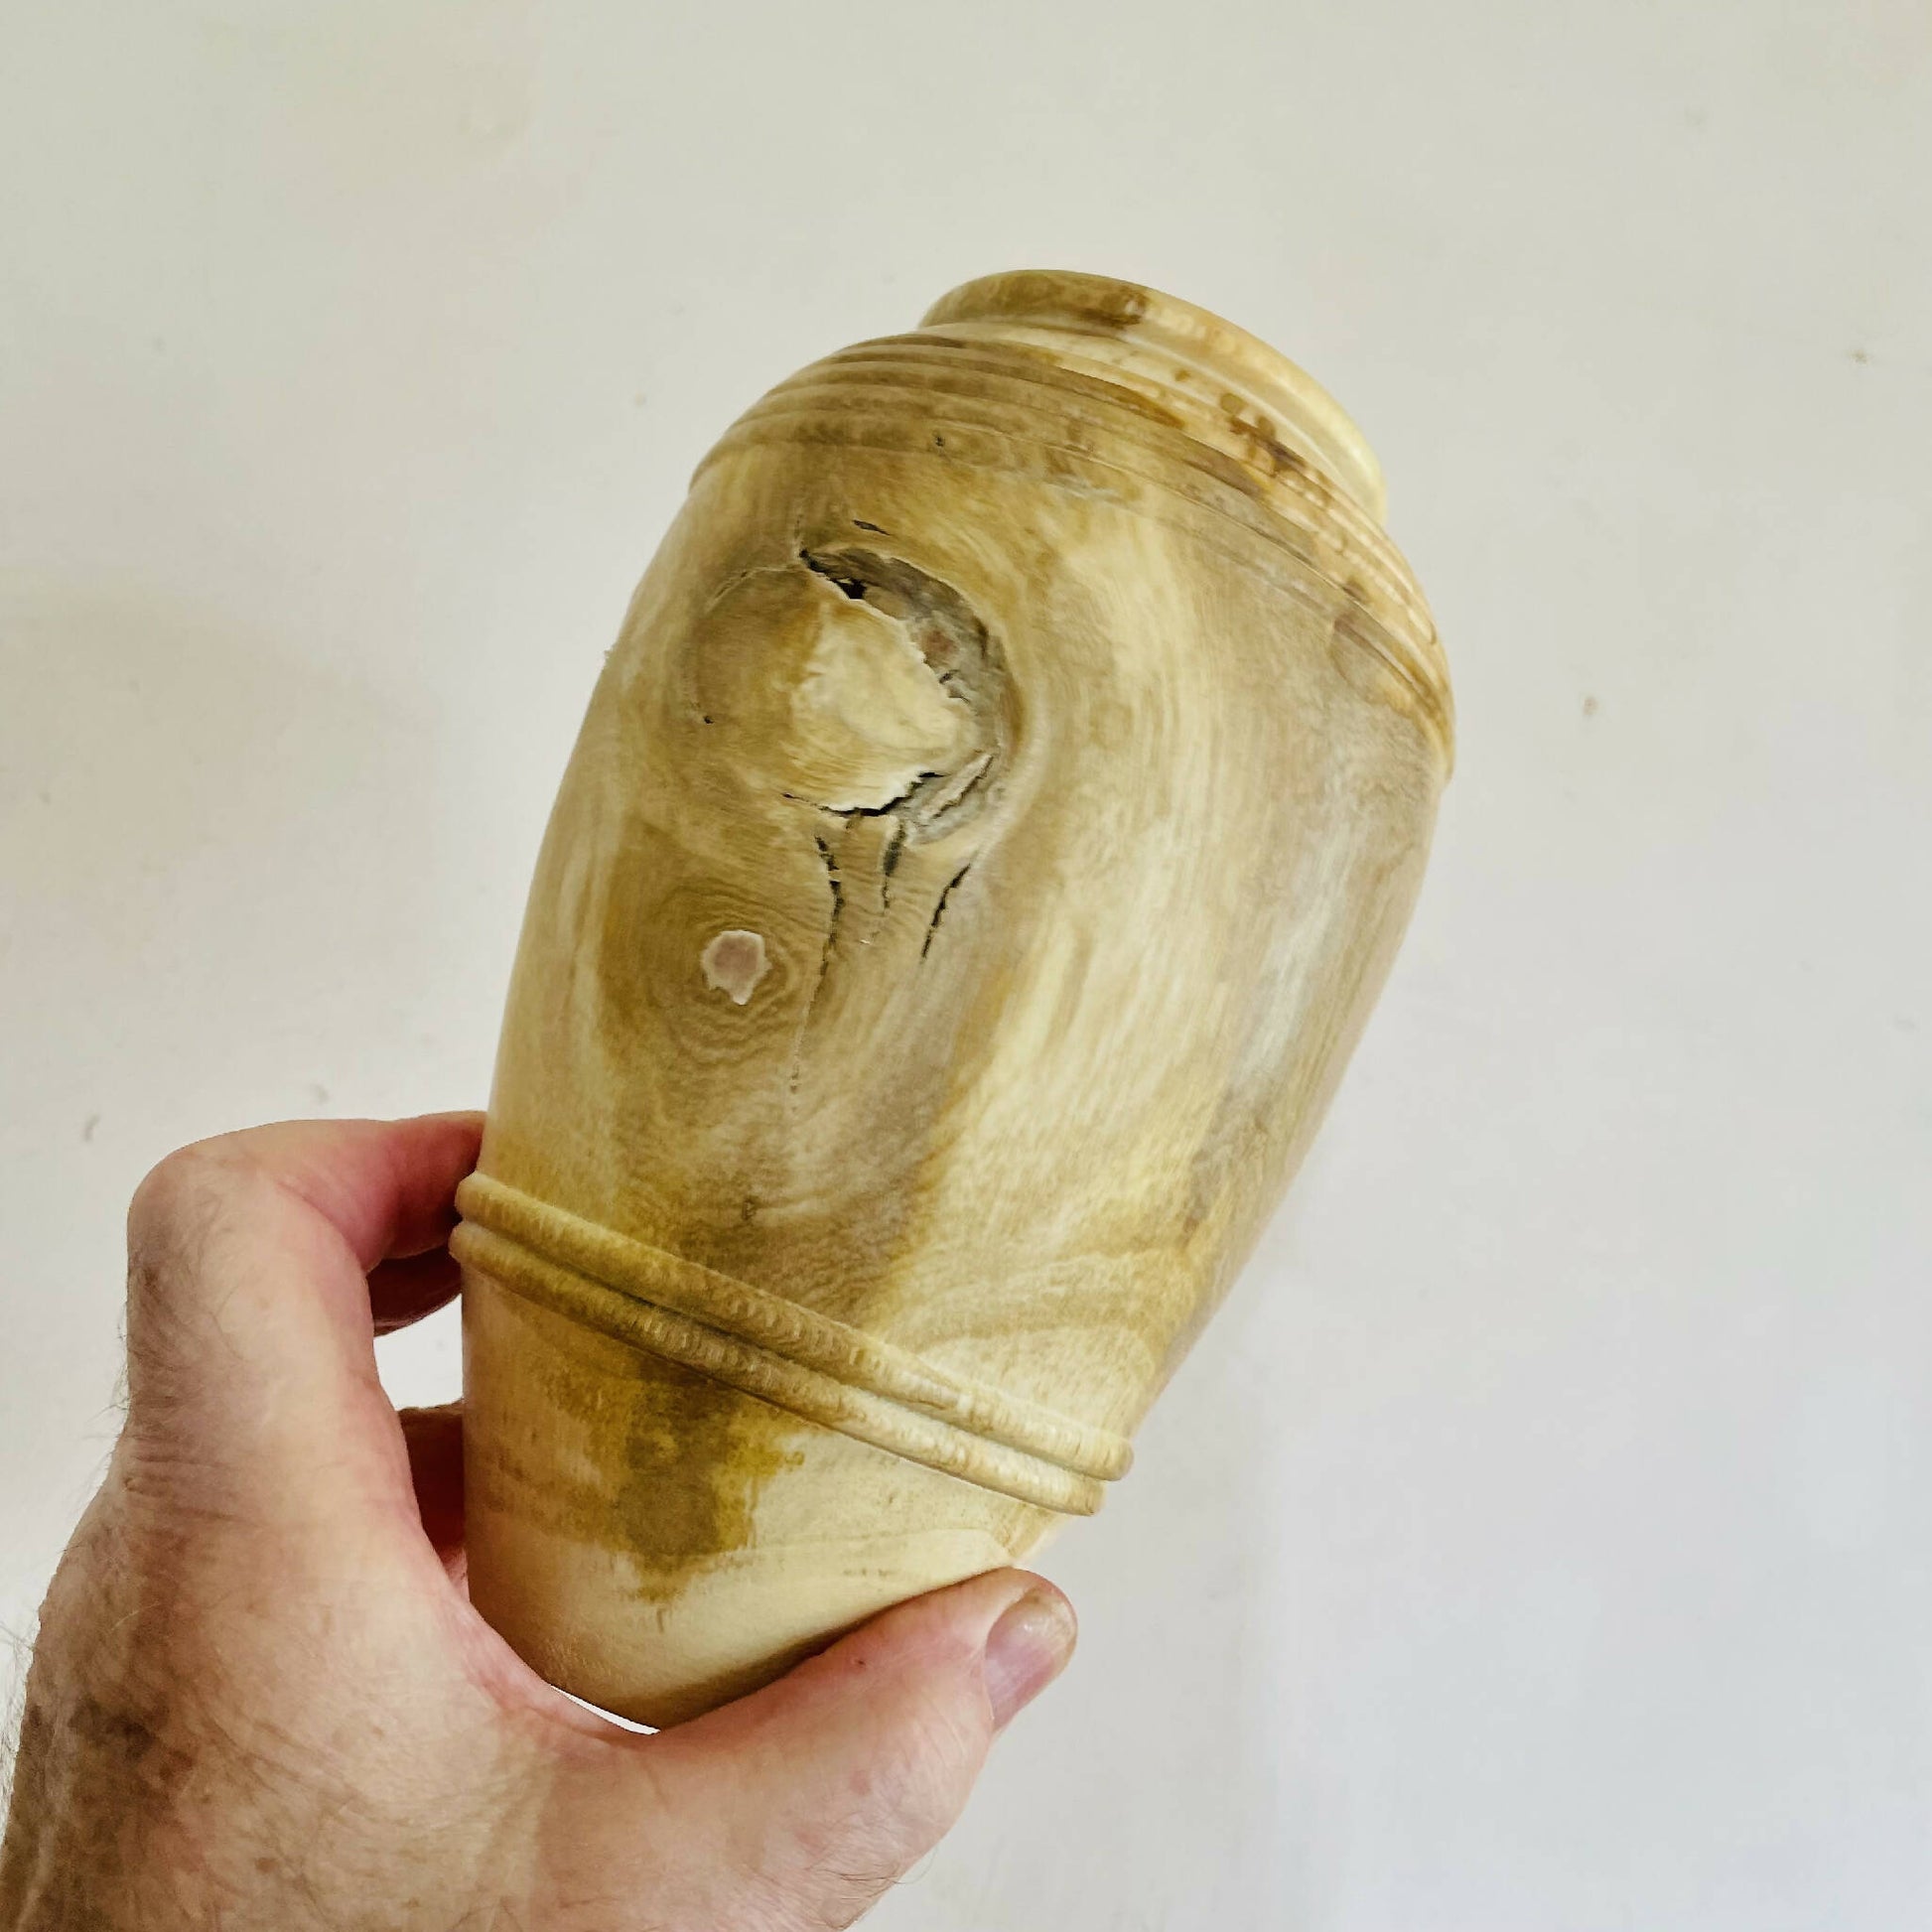 vase artisanal bois sculpte fait main artisanat francais